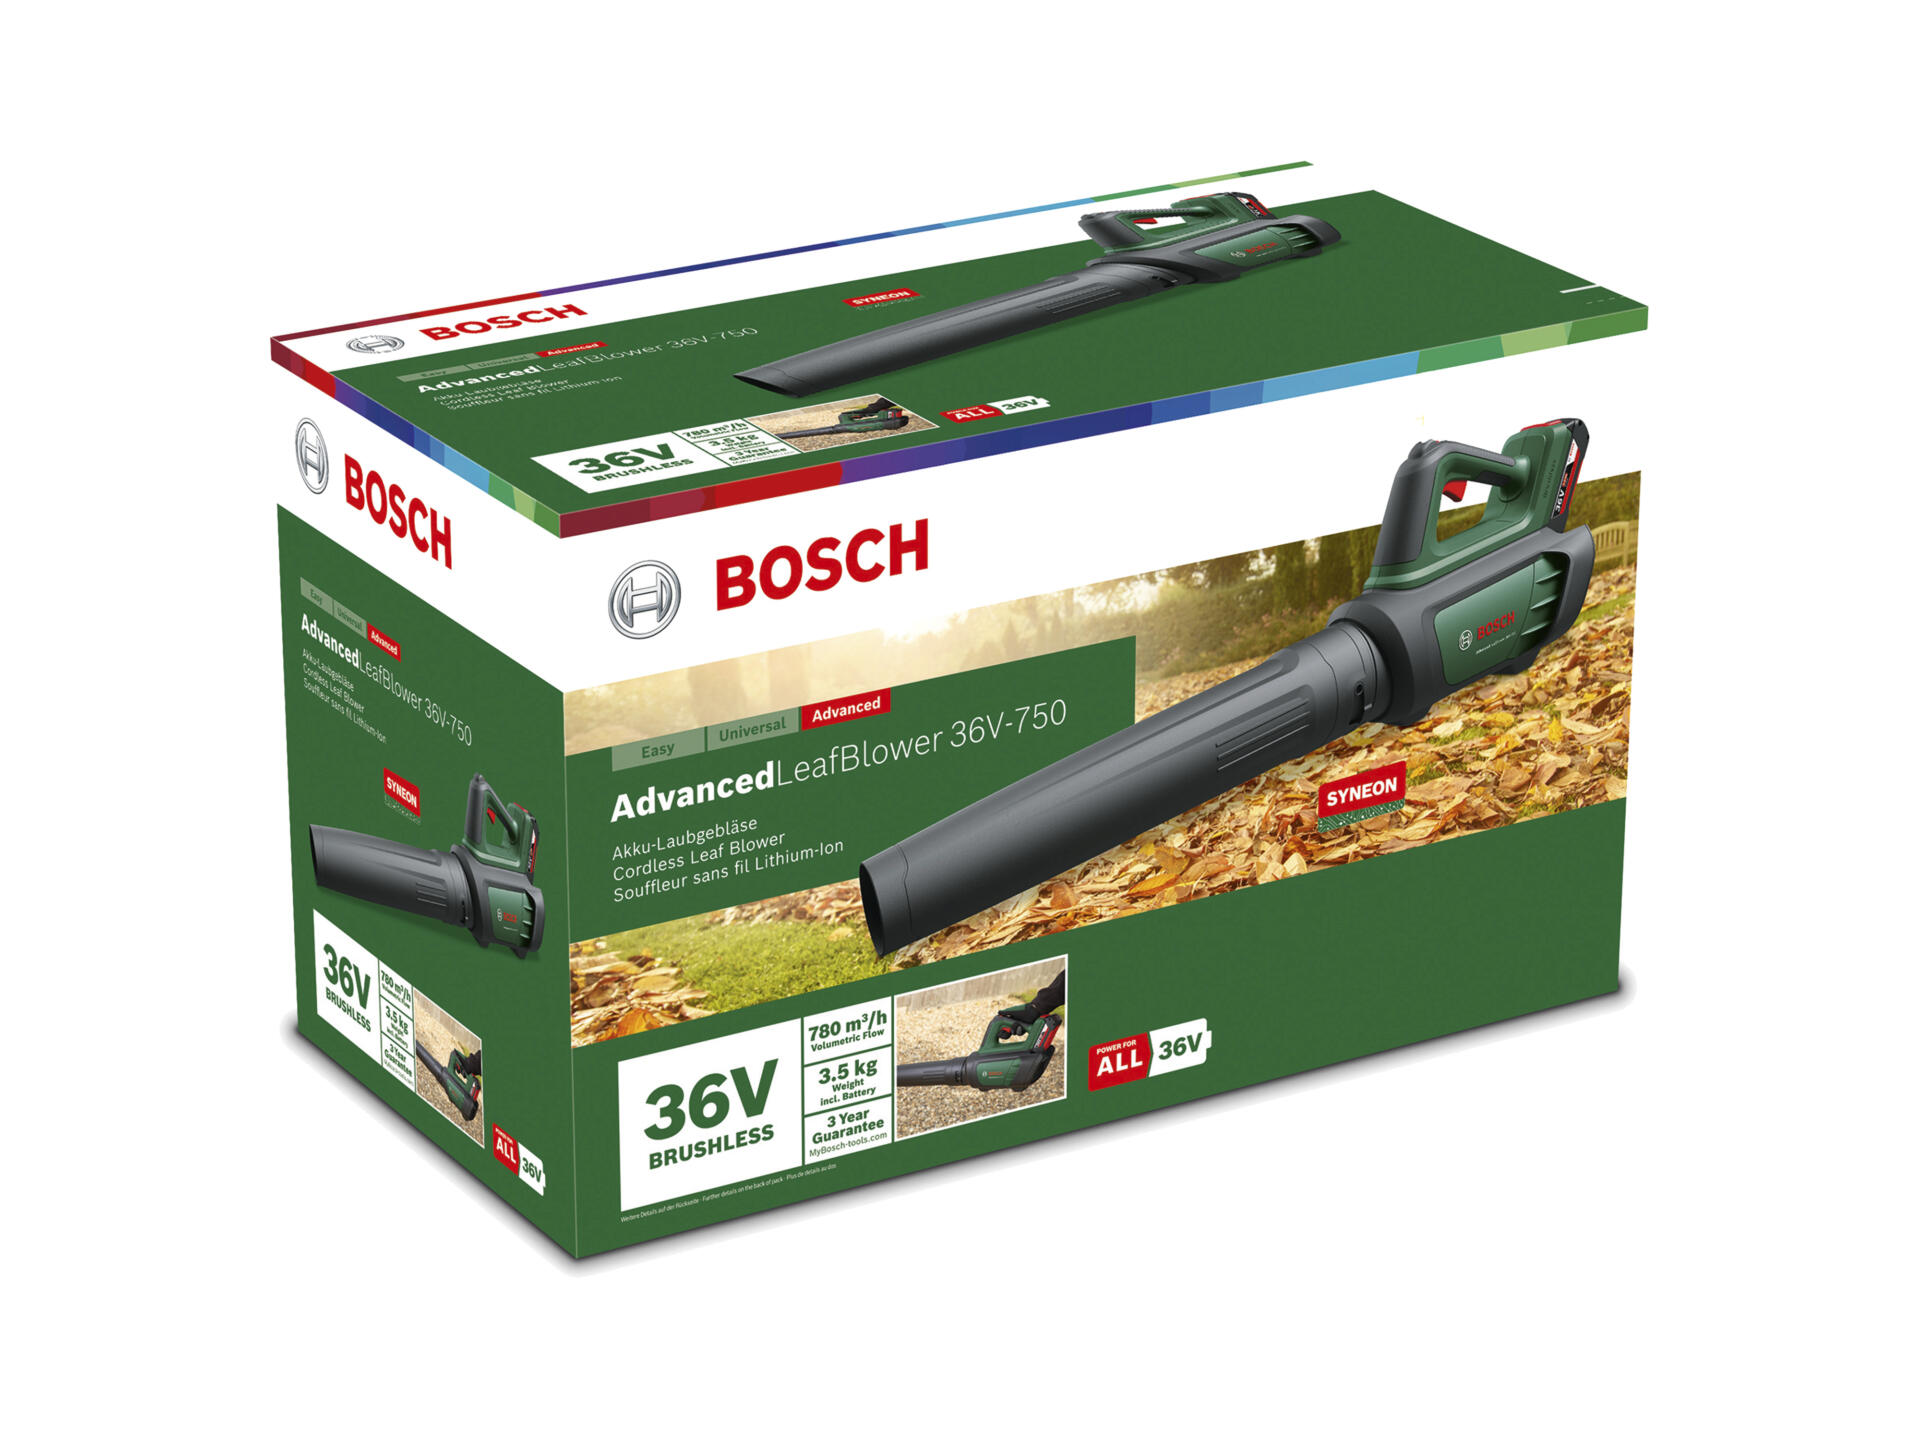 Bosch 36V-750 Advanced Leaf Blower souffleur de feuilles sans fil 36V Li-Ion